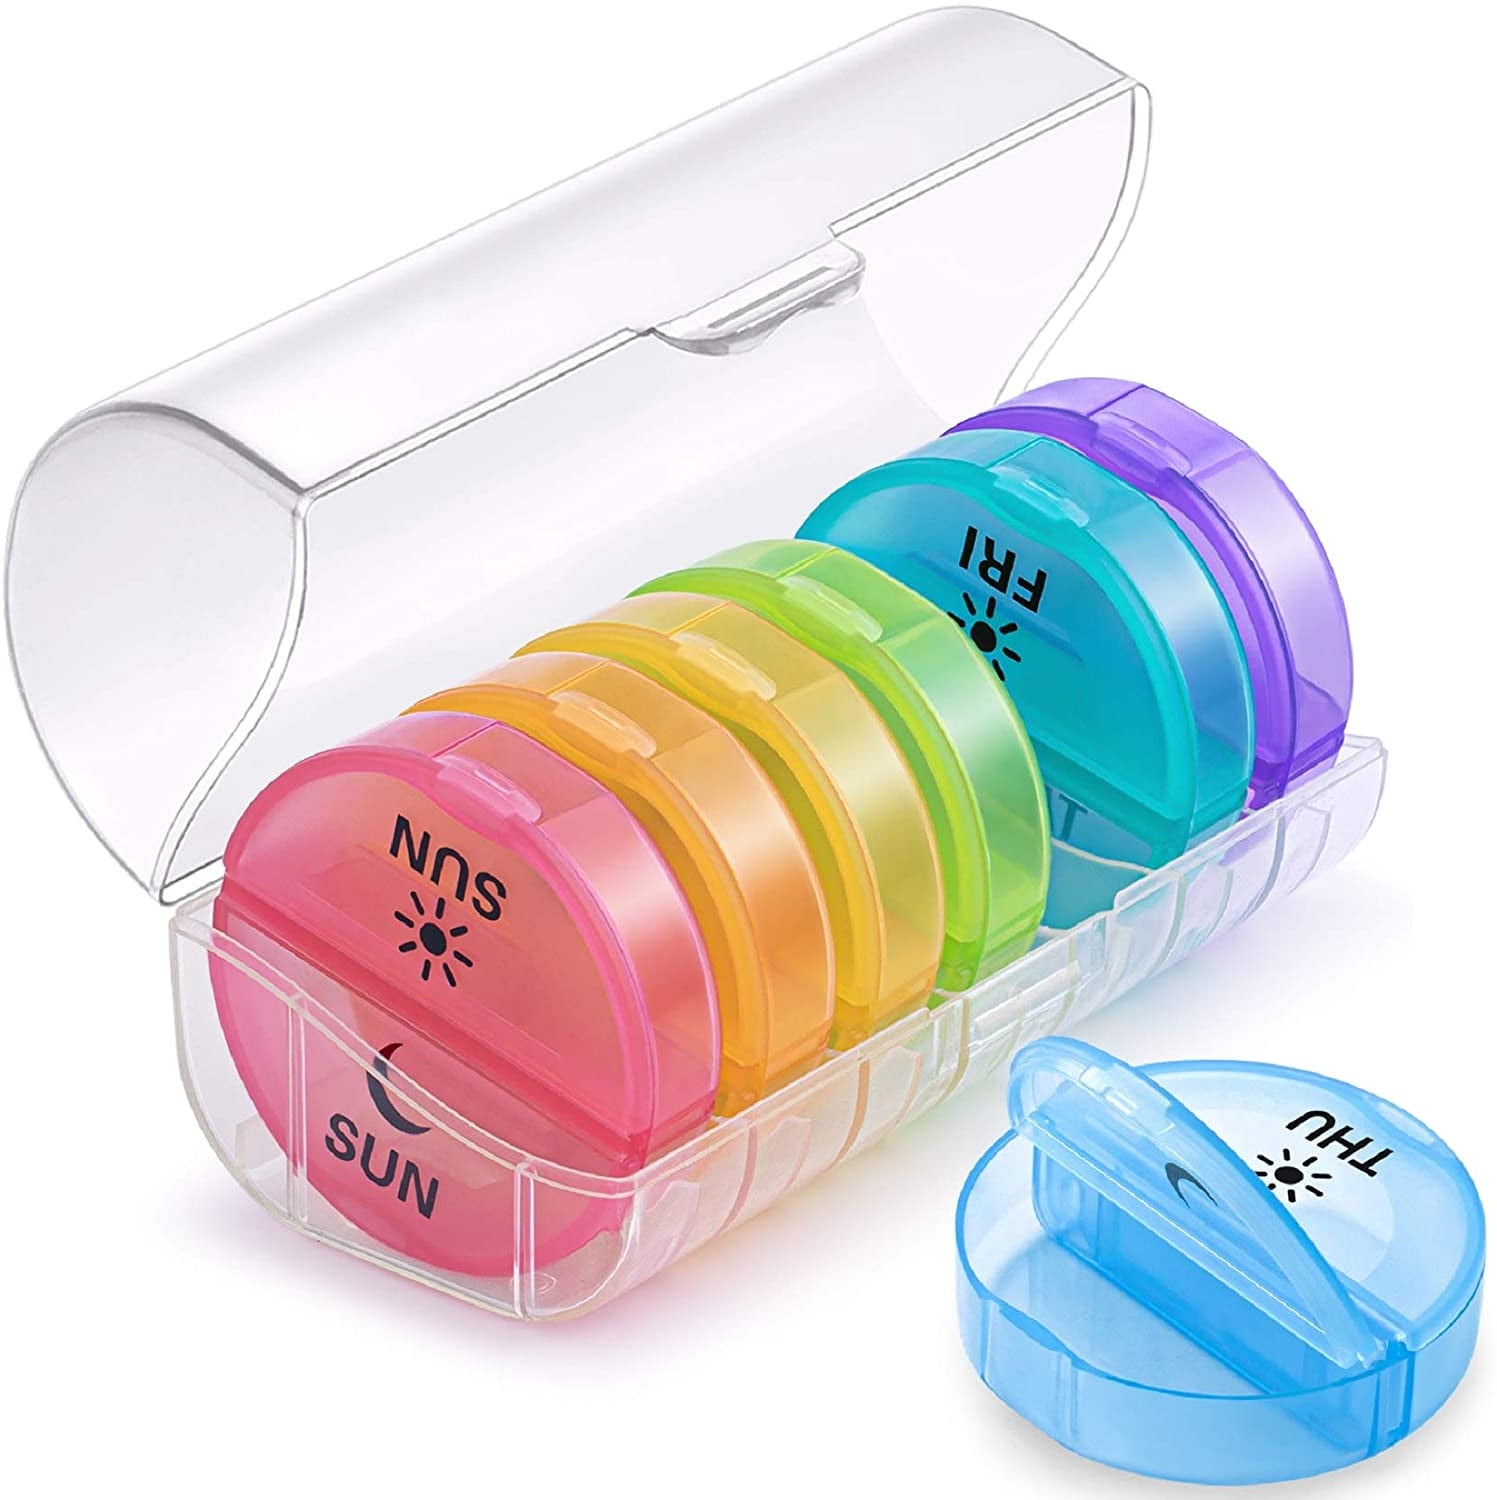 ATB Daily Pill Box Am PM Organizer Case Medicine Storage Vitamin Tablet Holder New